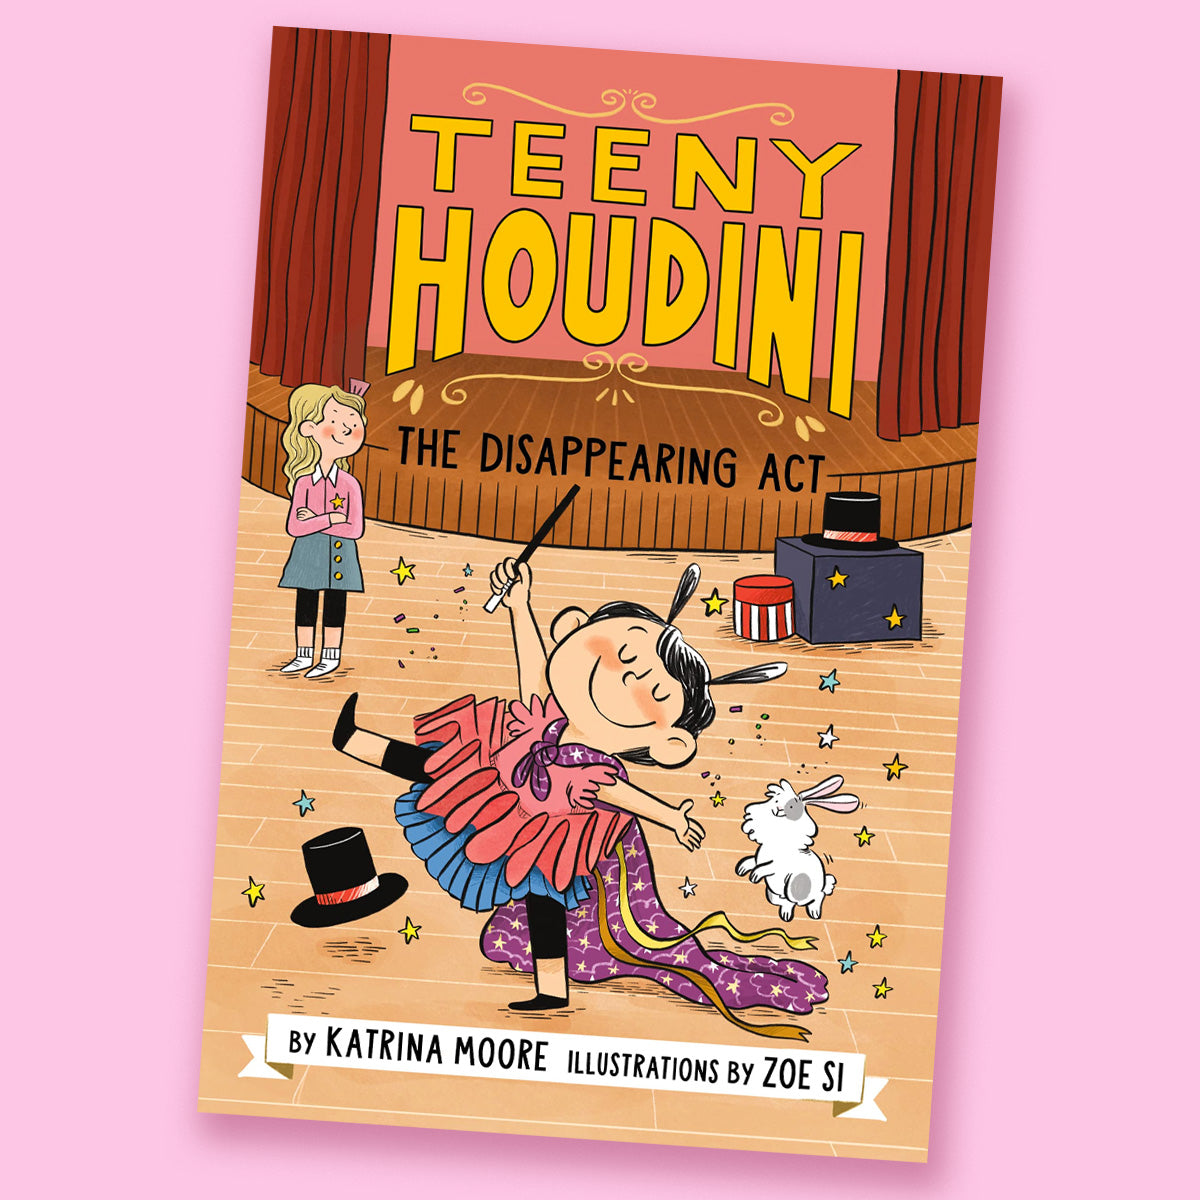 Teeny Houdini #1: The Disappearing Act by Katrina Moore and Zoe Si